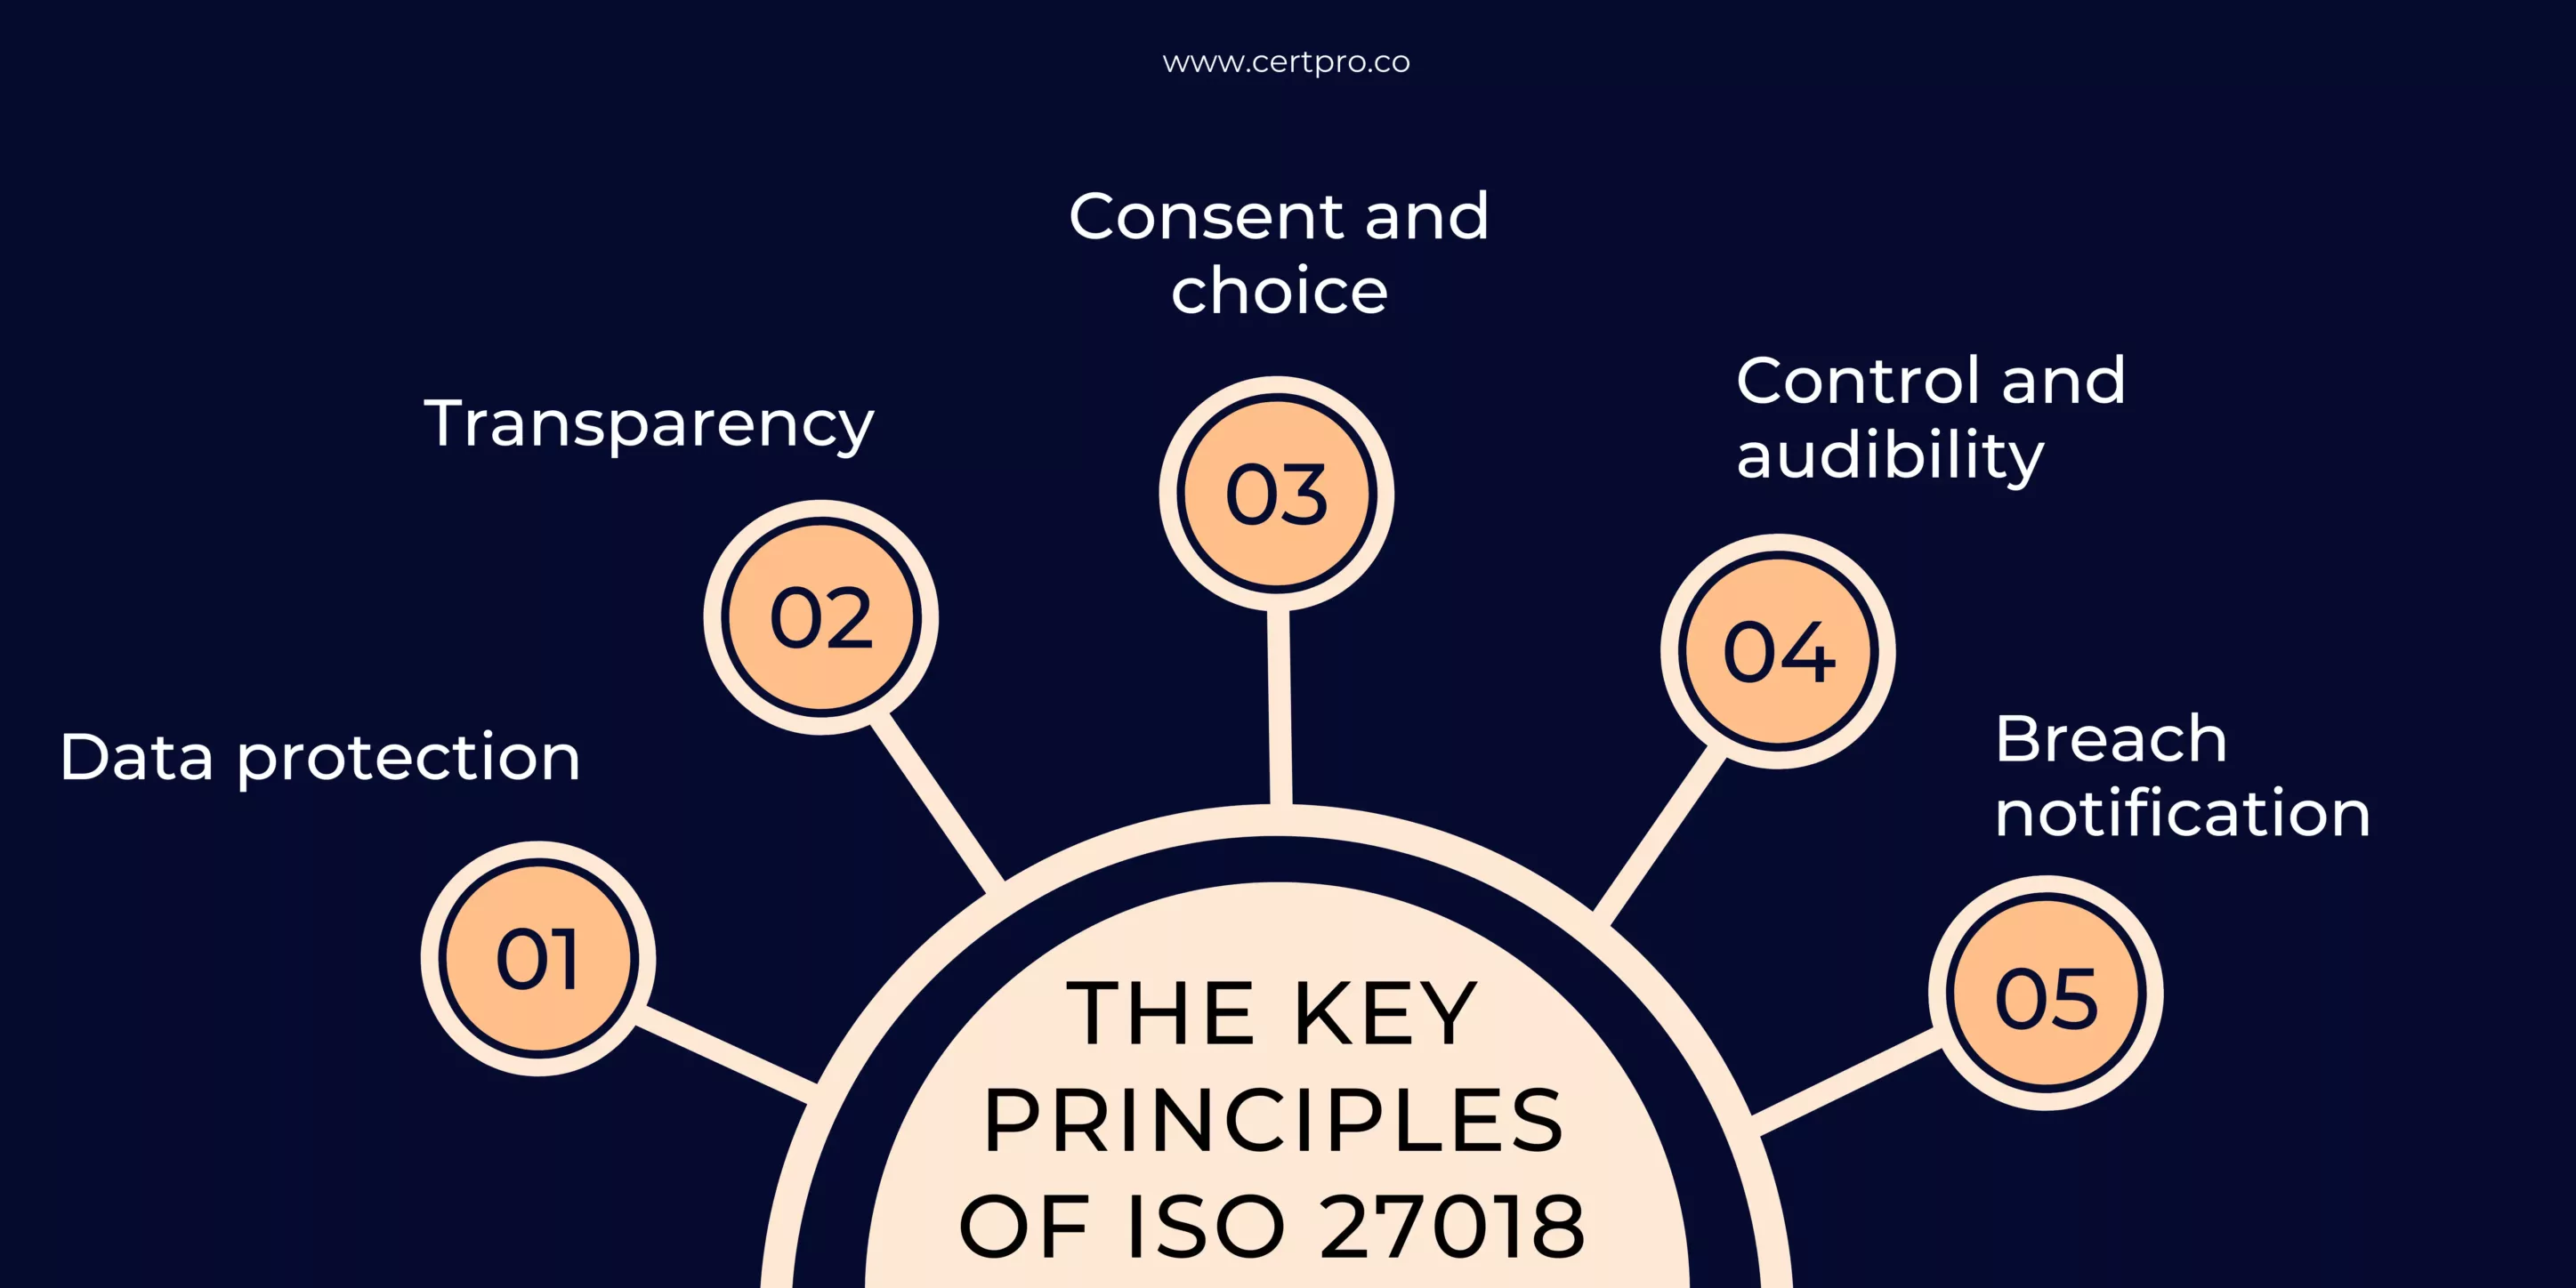 KEY PRINCIPLES OF ISO 27018-2019